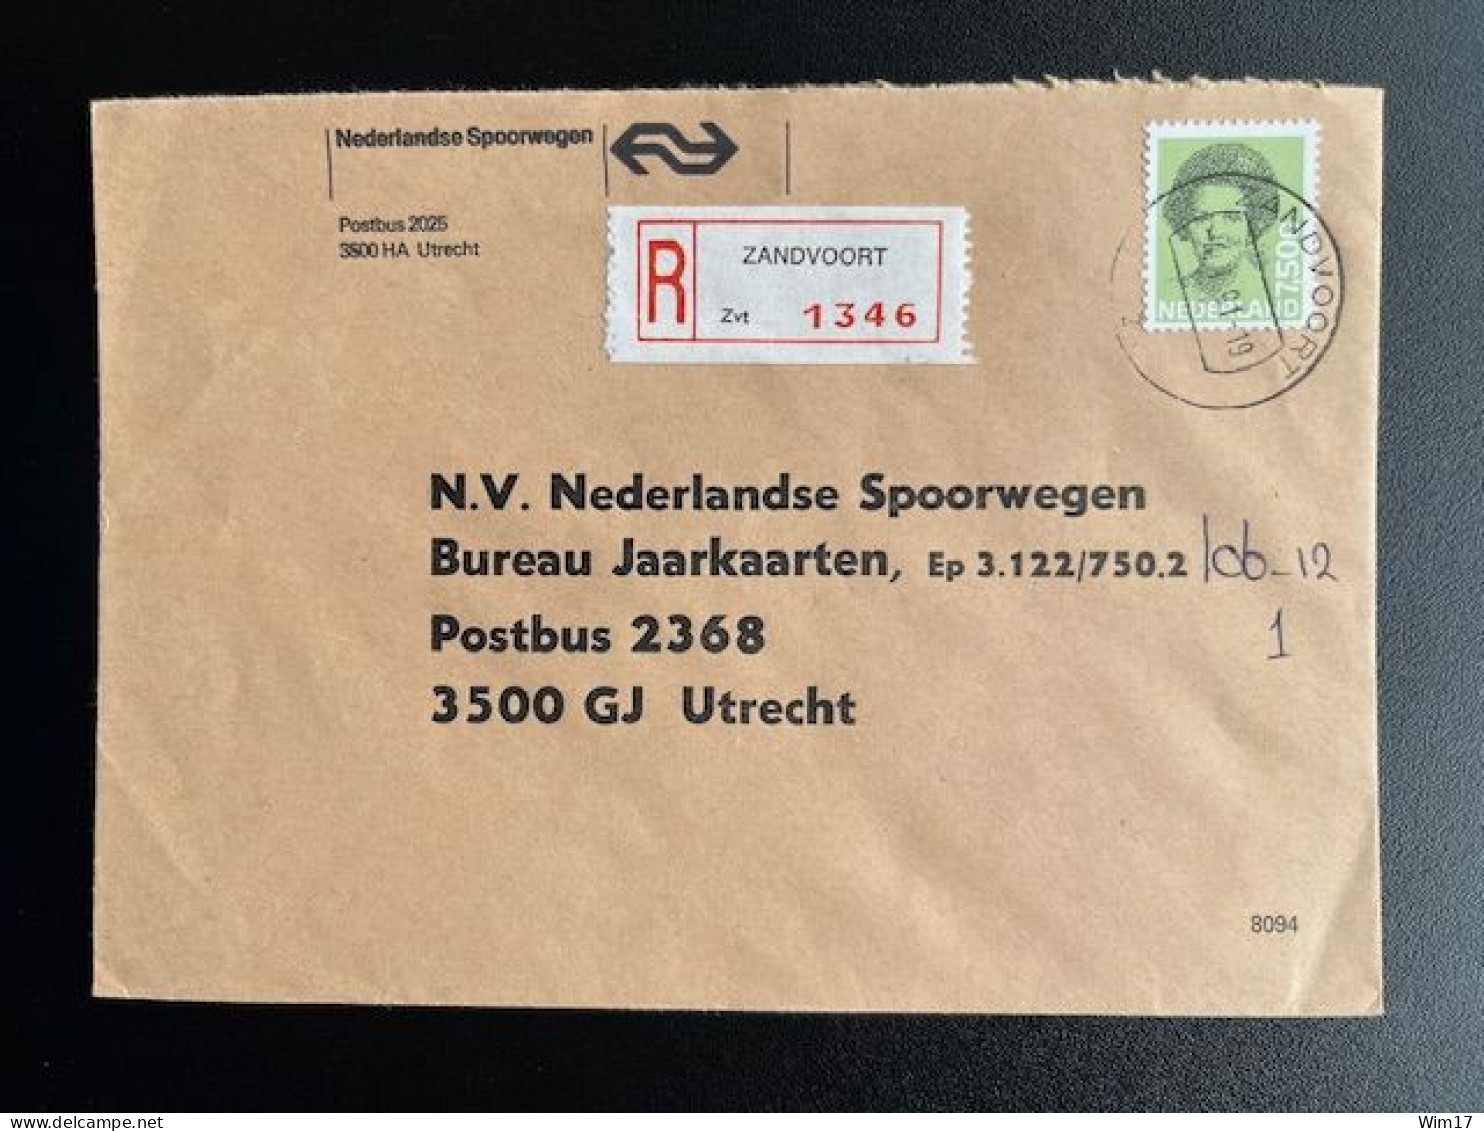 NETHERLANDS 1991 REGISTERED LETTER ZANDVOORT TO UTRECHT 04-01-1991 NEDERLAND AANGETEKEND - Covers & Documents